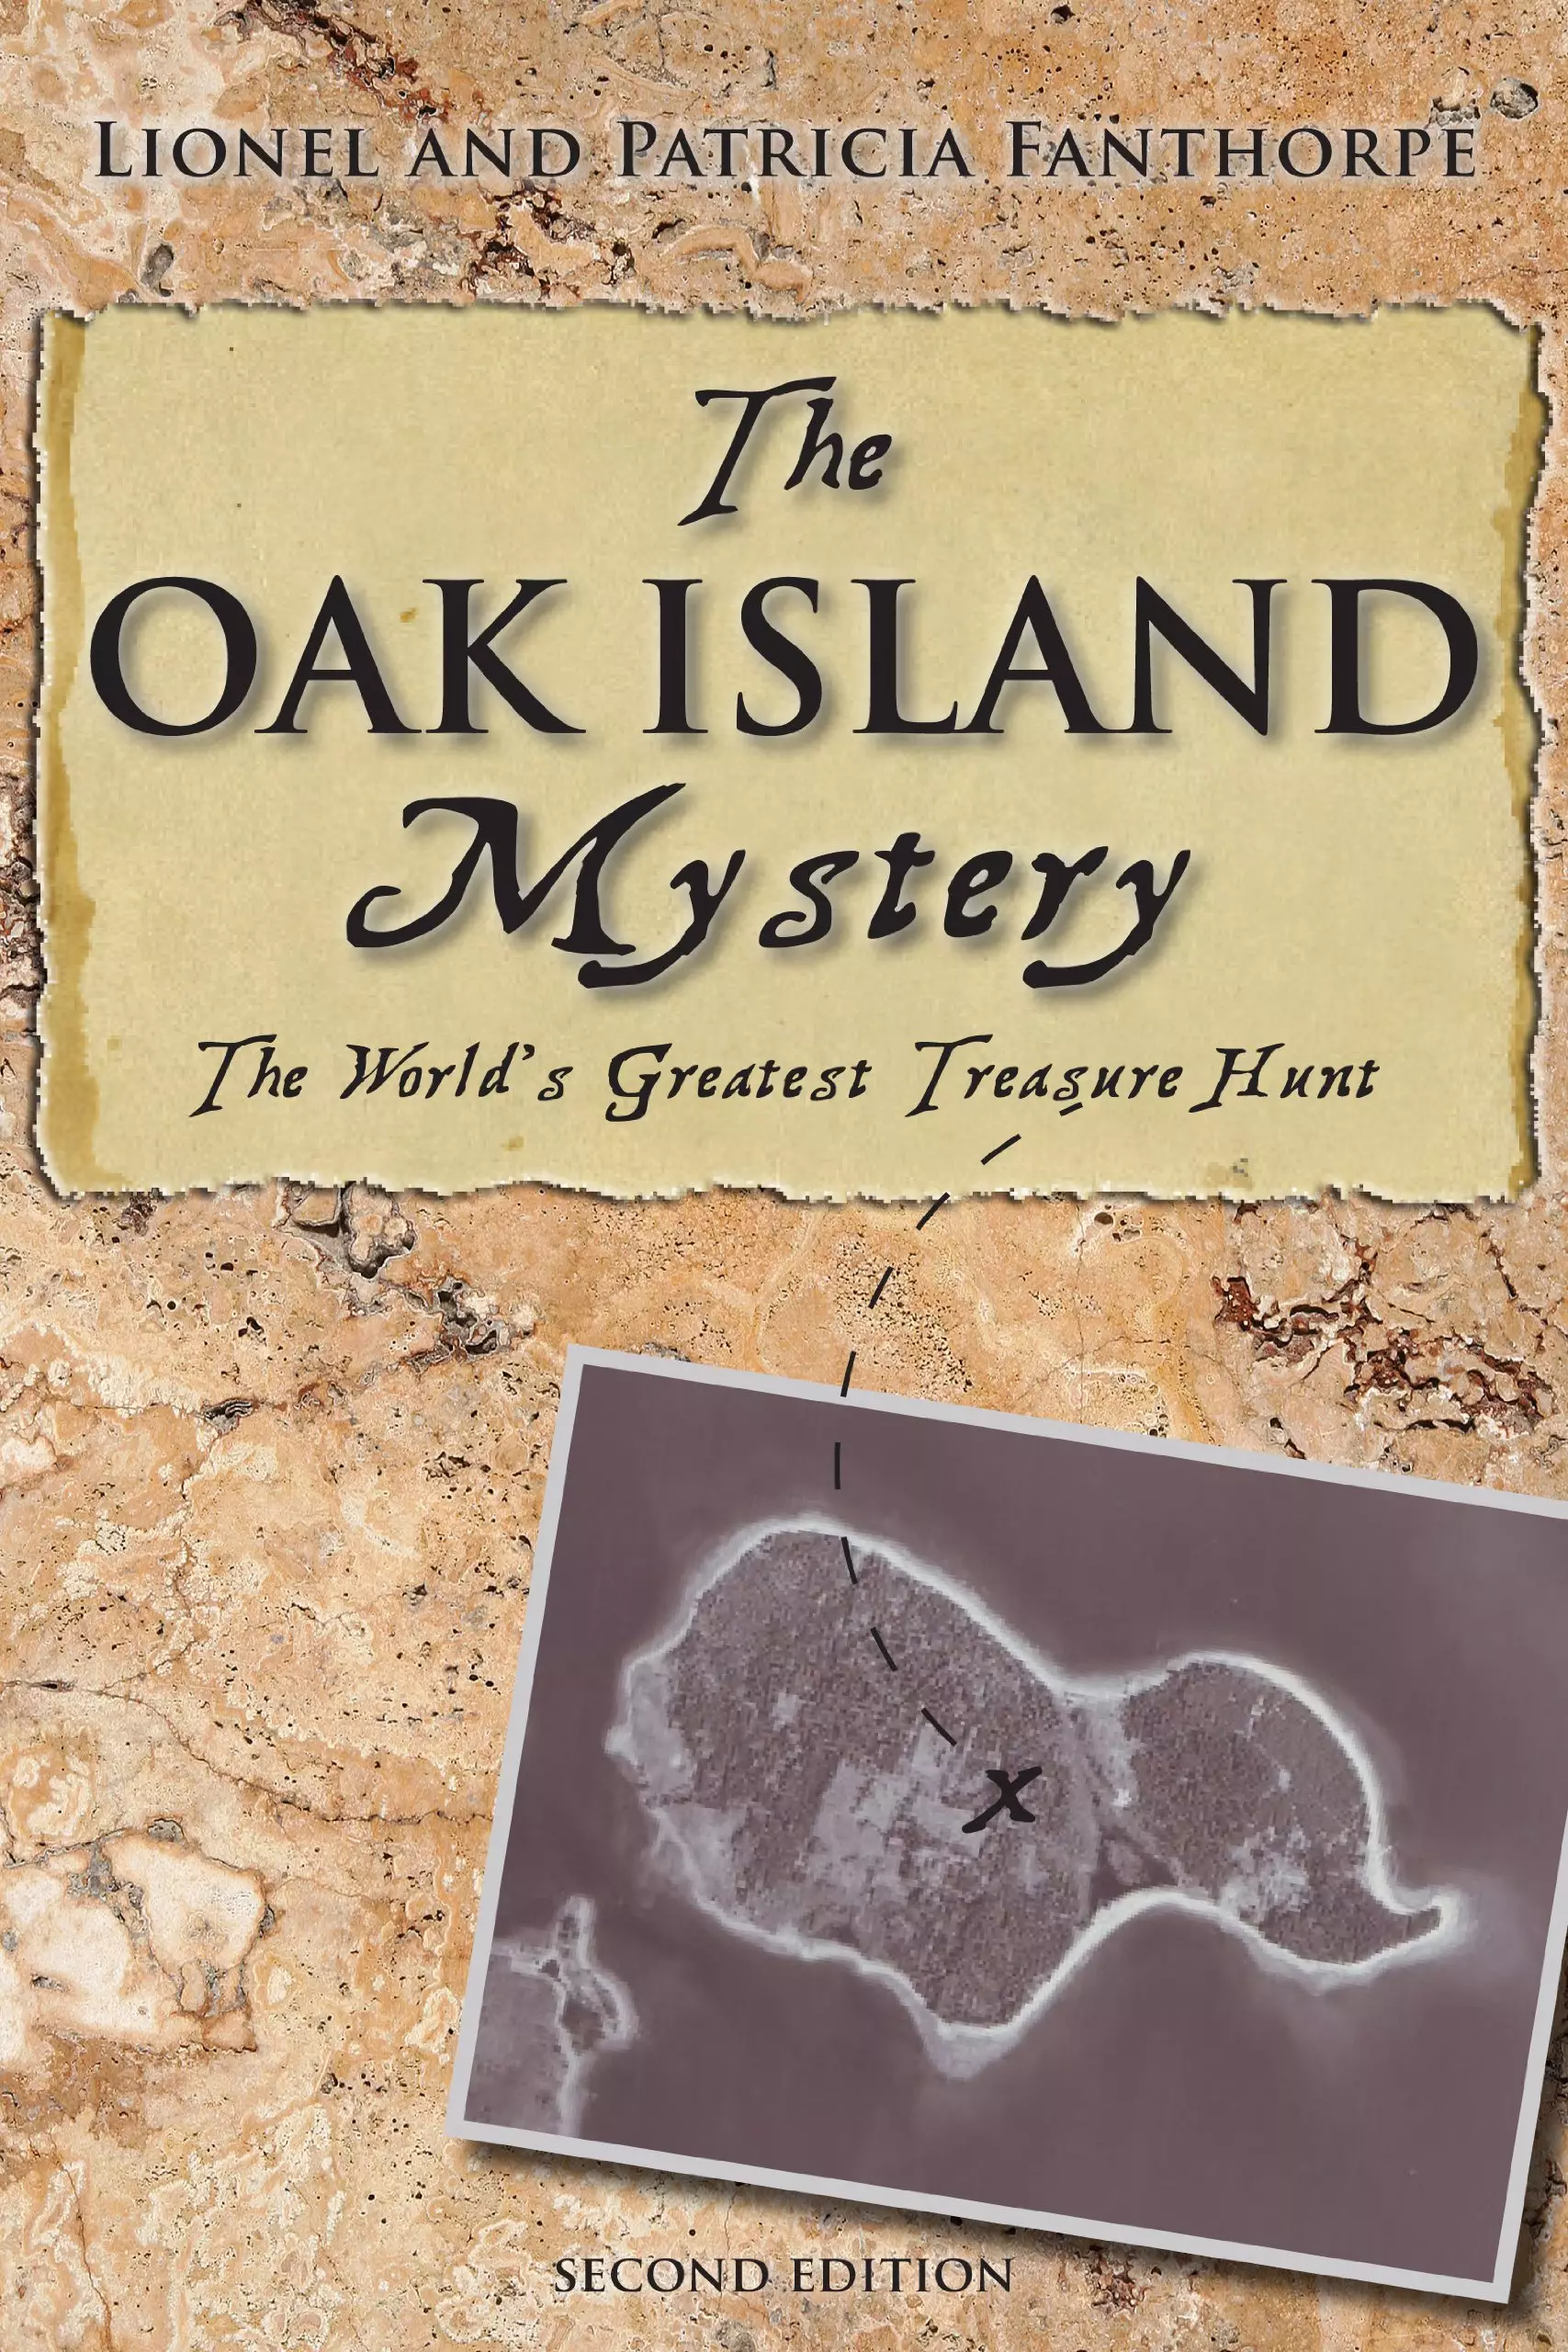 The Oak Island Mystery: The Secret of the World's Greatest Treasure Hunt